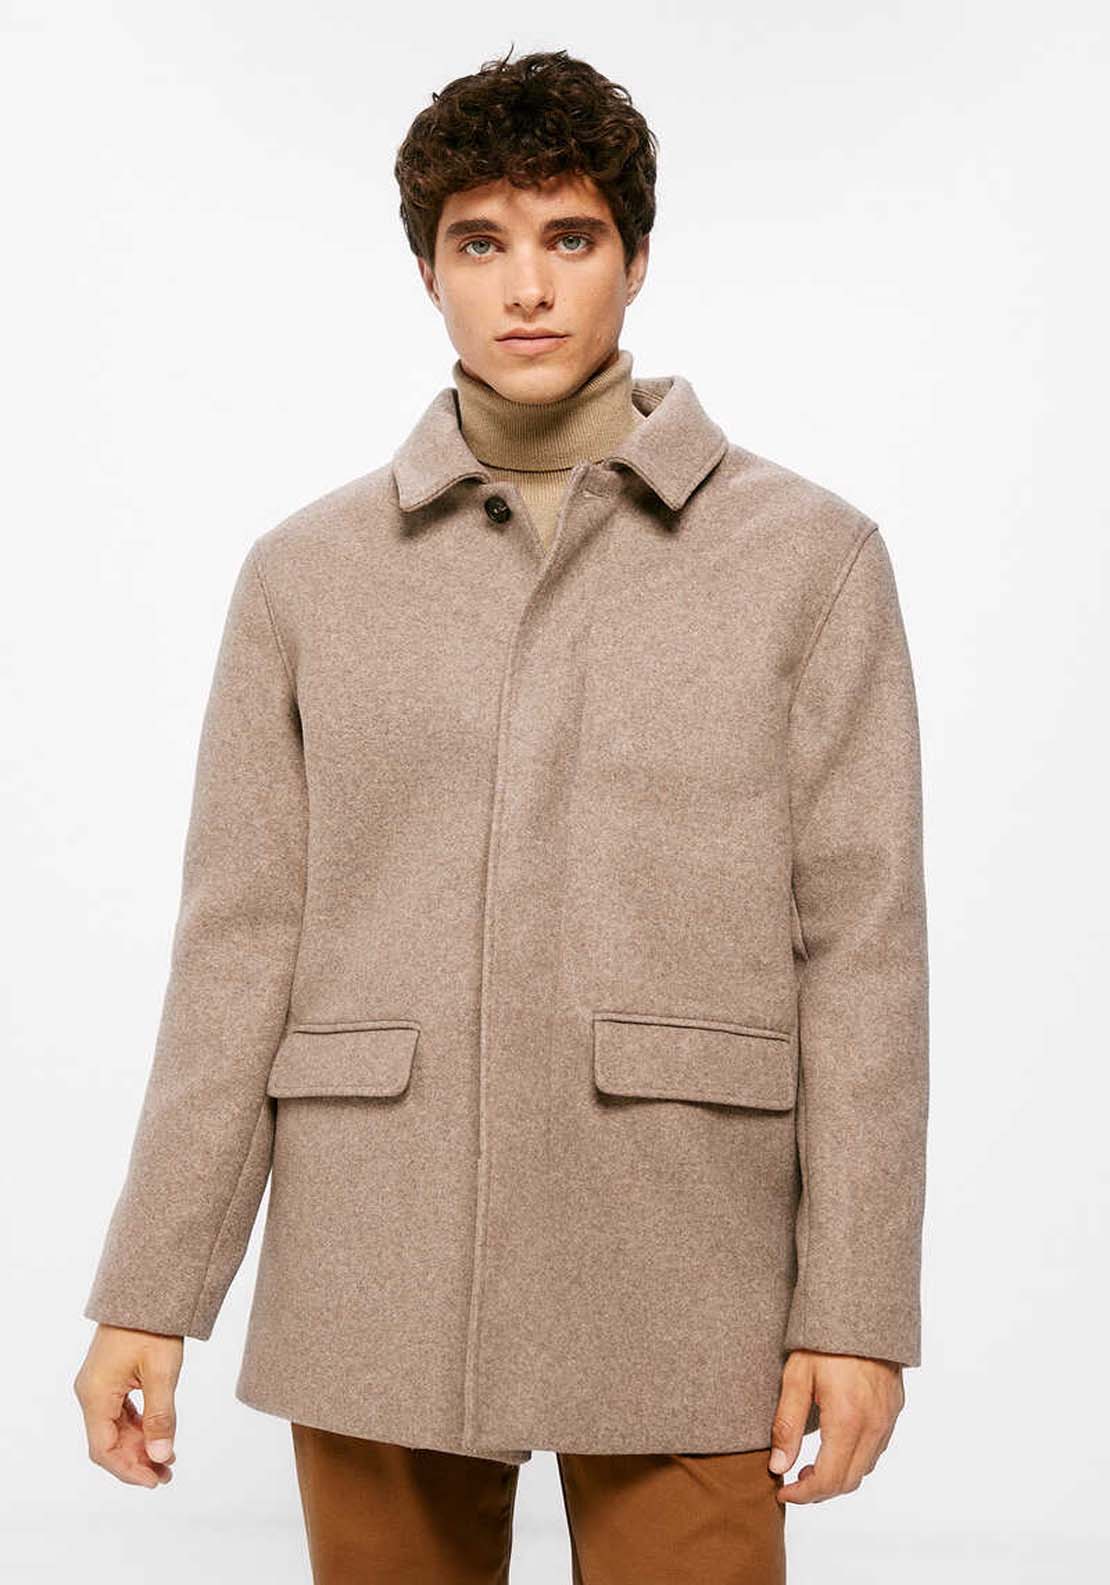 Springfield Comfort stretch coat - Beige / Camel 1 Shaws Department Stores